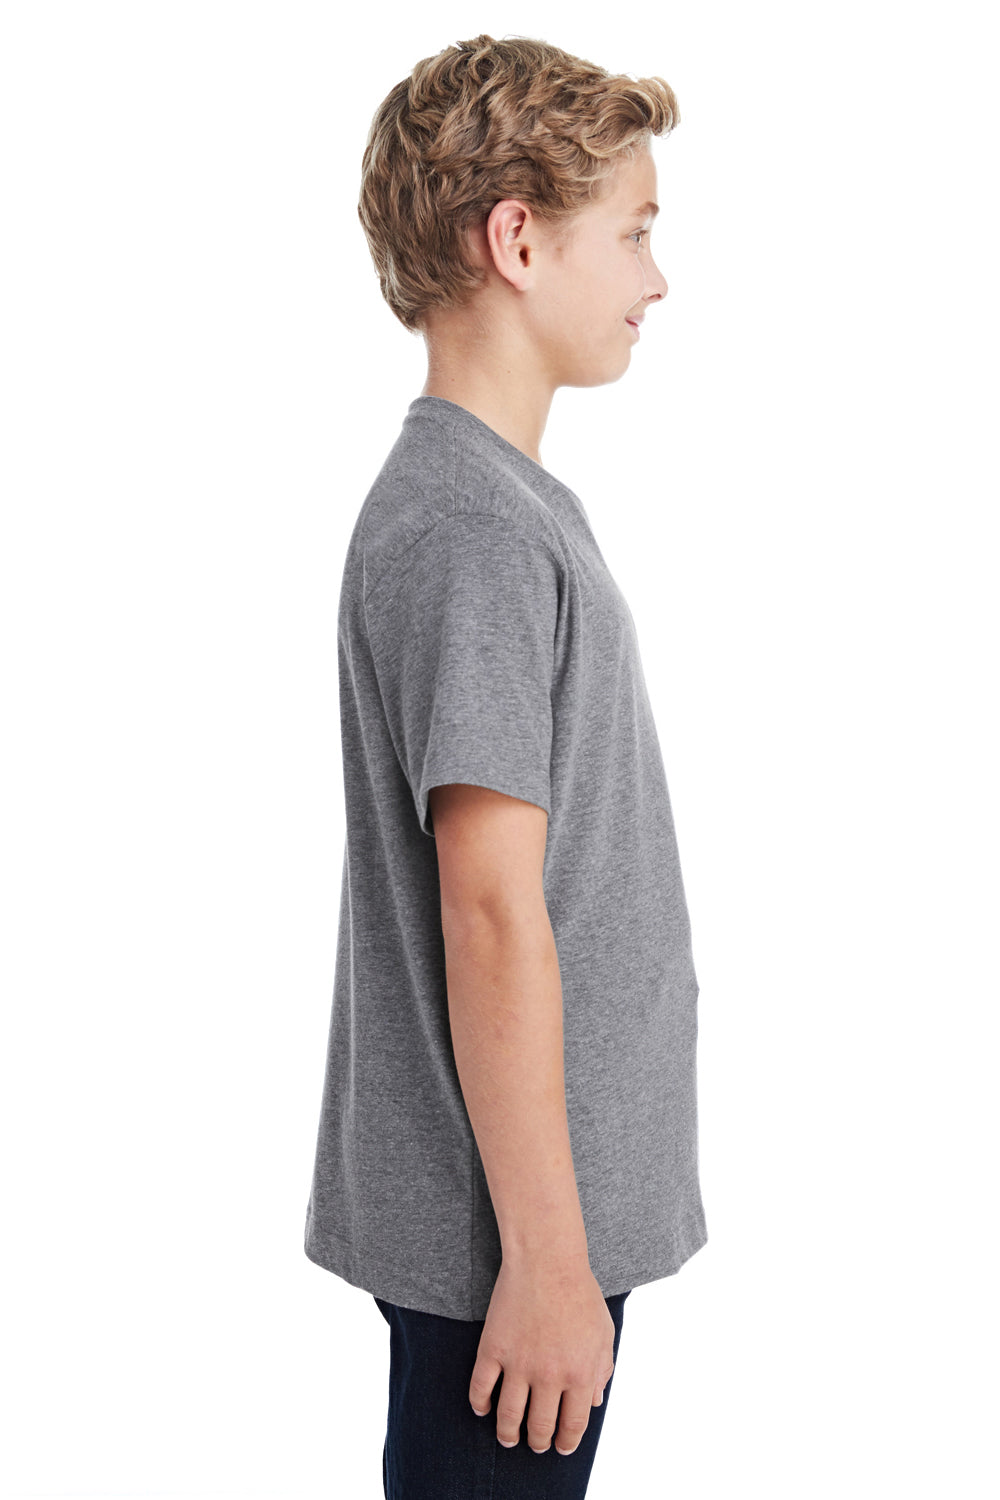 LAT 6101 Youth Fine Jersey Short Sleeve Crewneck T-Shirt Heather Granite Grey Side